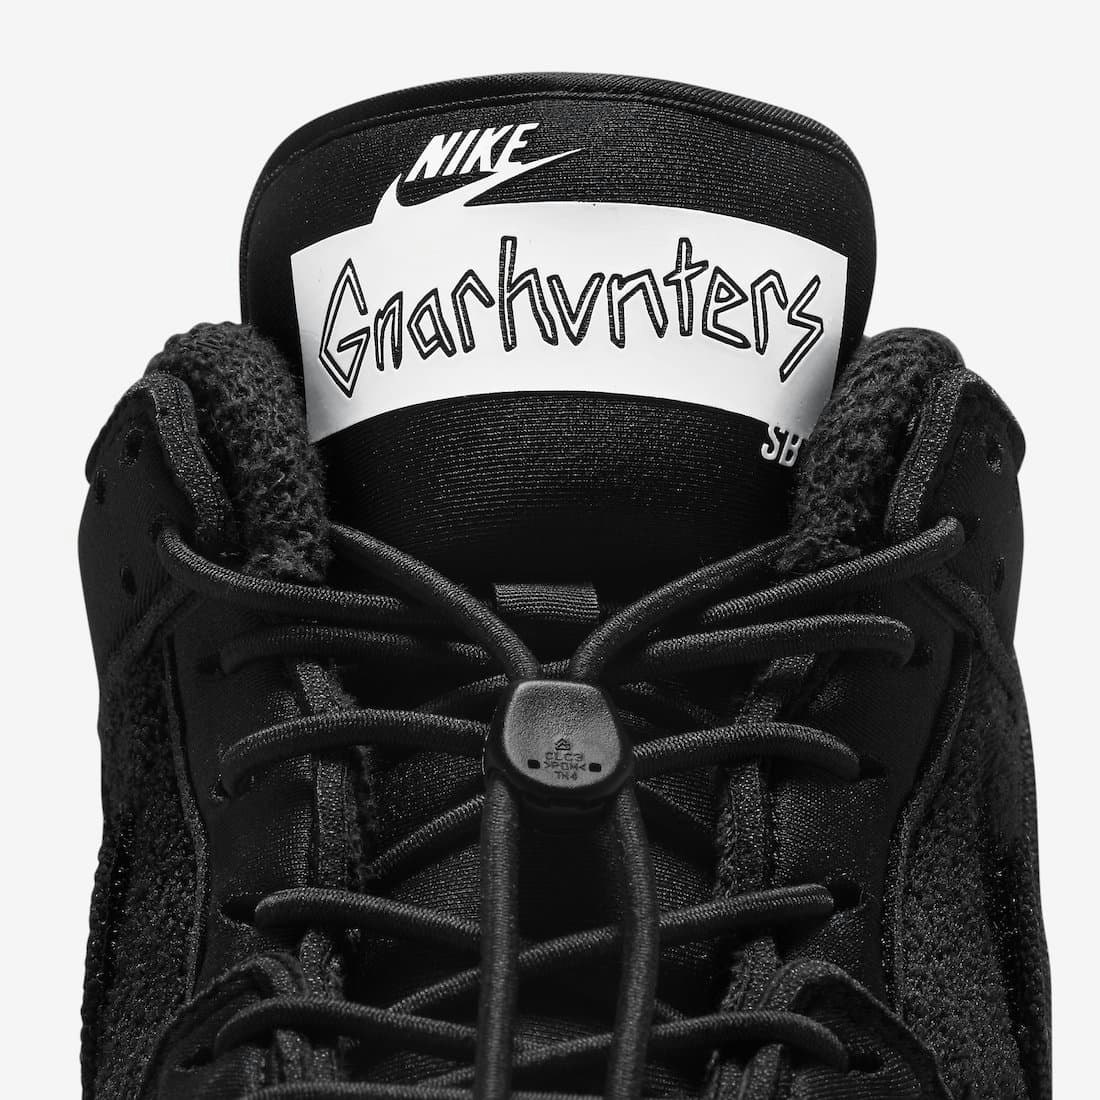 Gnarhunters x Nike SB Dunk Low "Gnar"